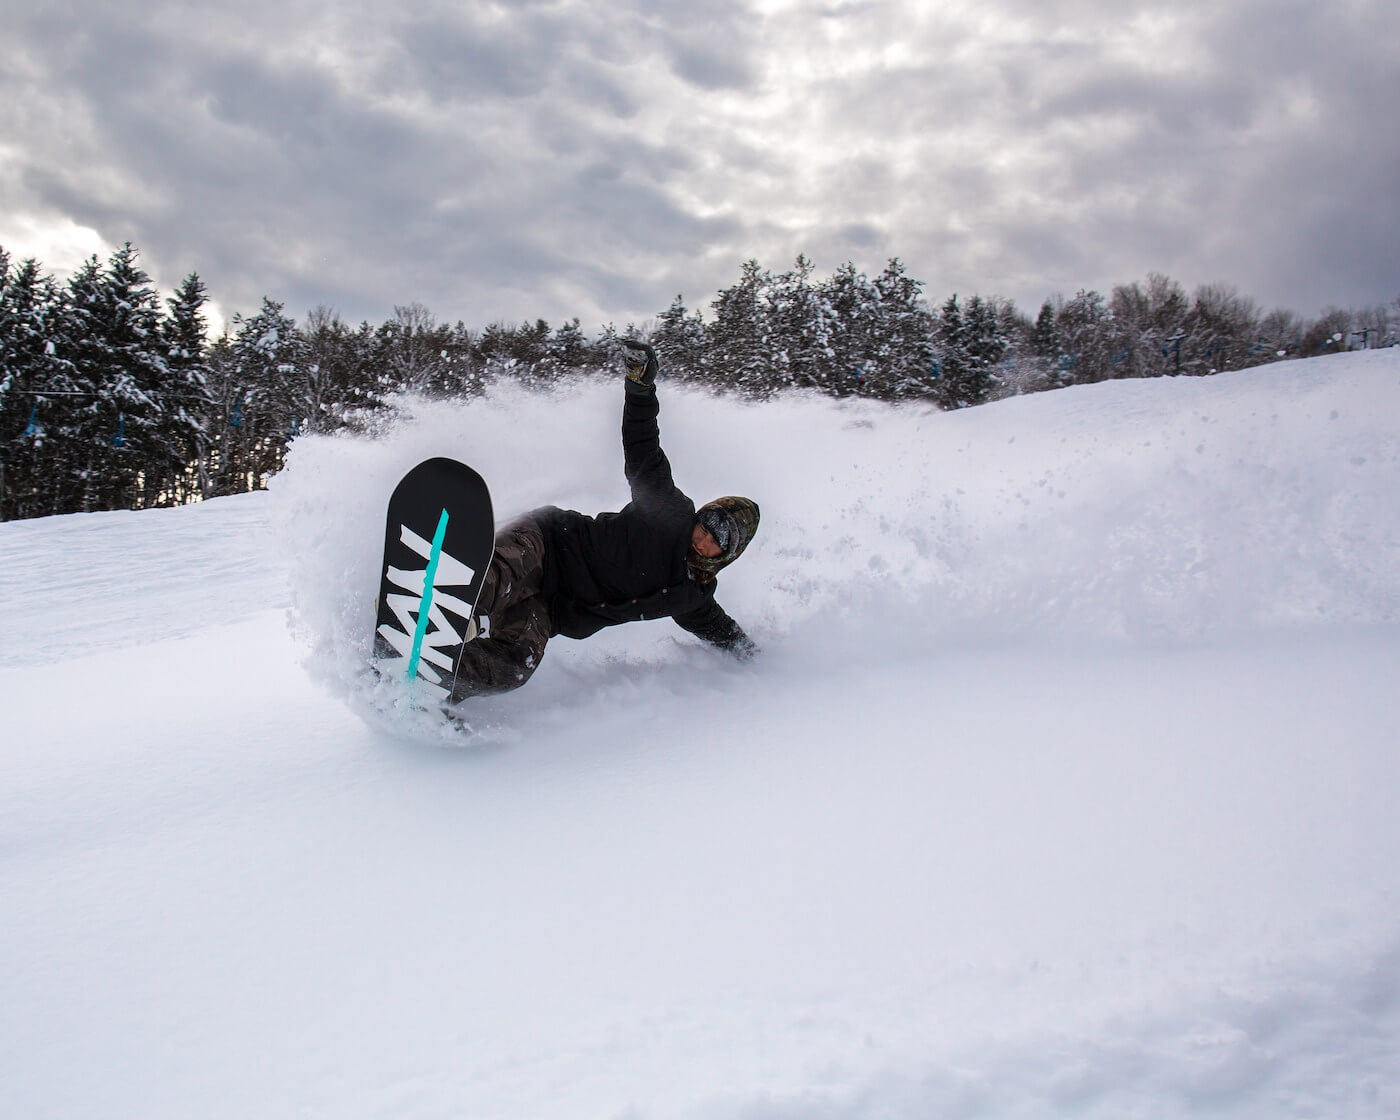 Snowboarder slashing powder at Snow Ridge in upstate New York snowiest ski resorts in a lake effect snow bel